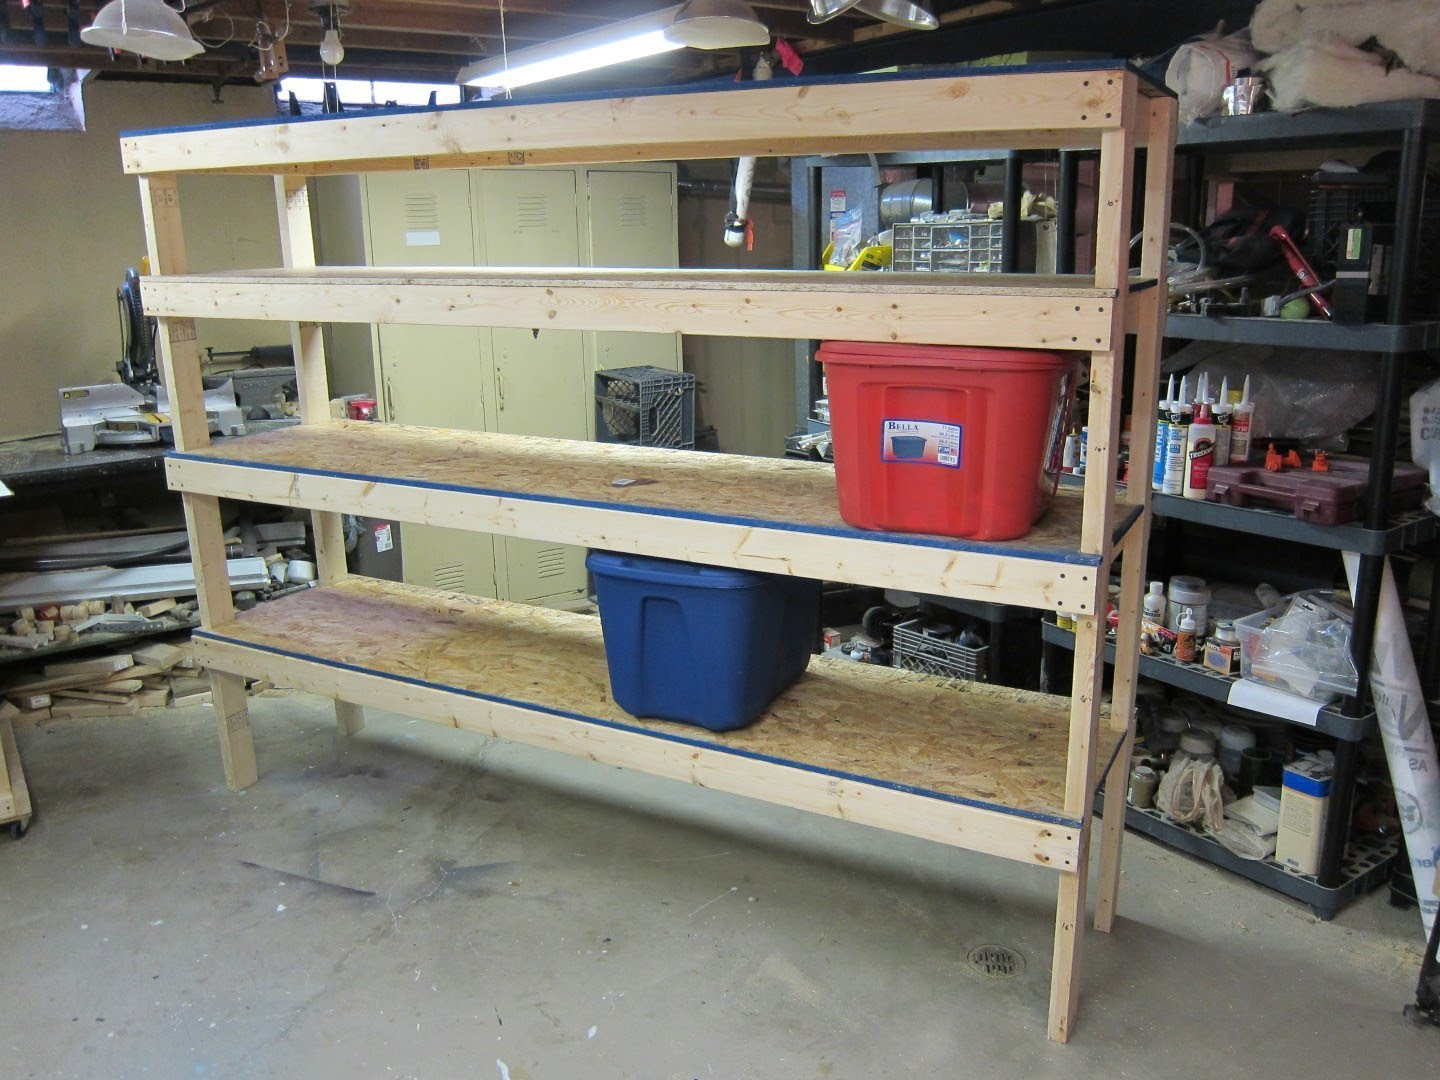 Best ideas about DIY Storage Shelf Plans
. Save or Pin 20 DIY Garage Shelving Ideas Now.